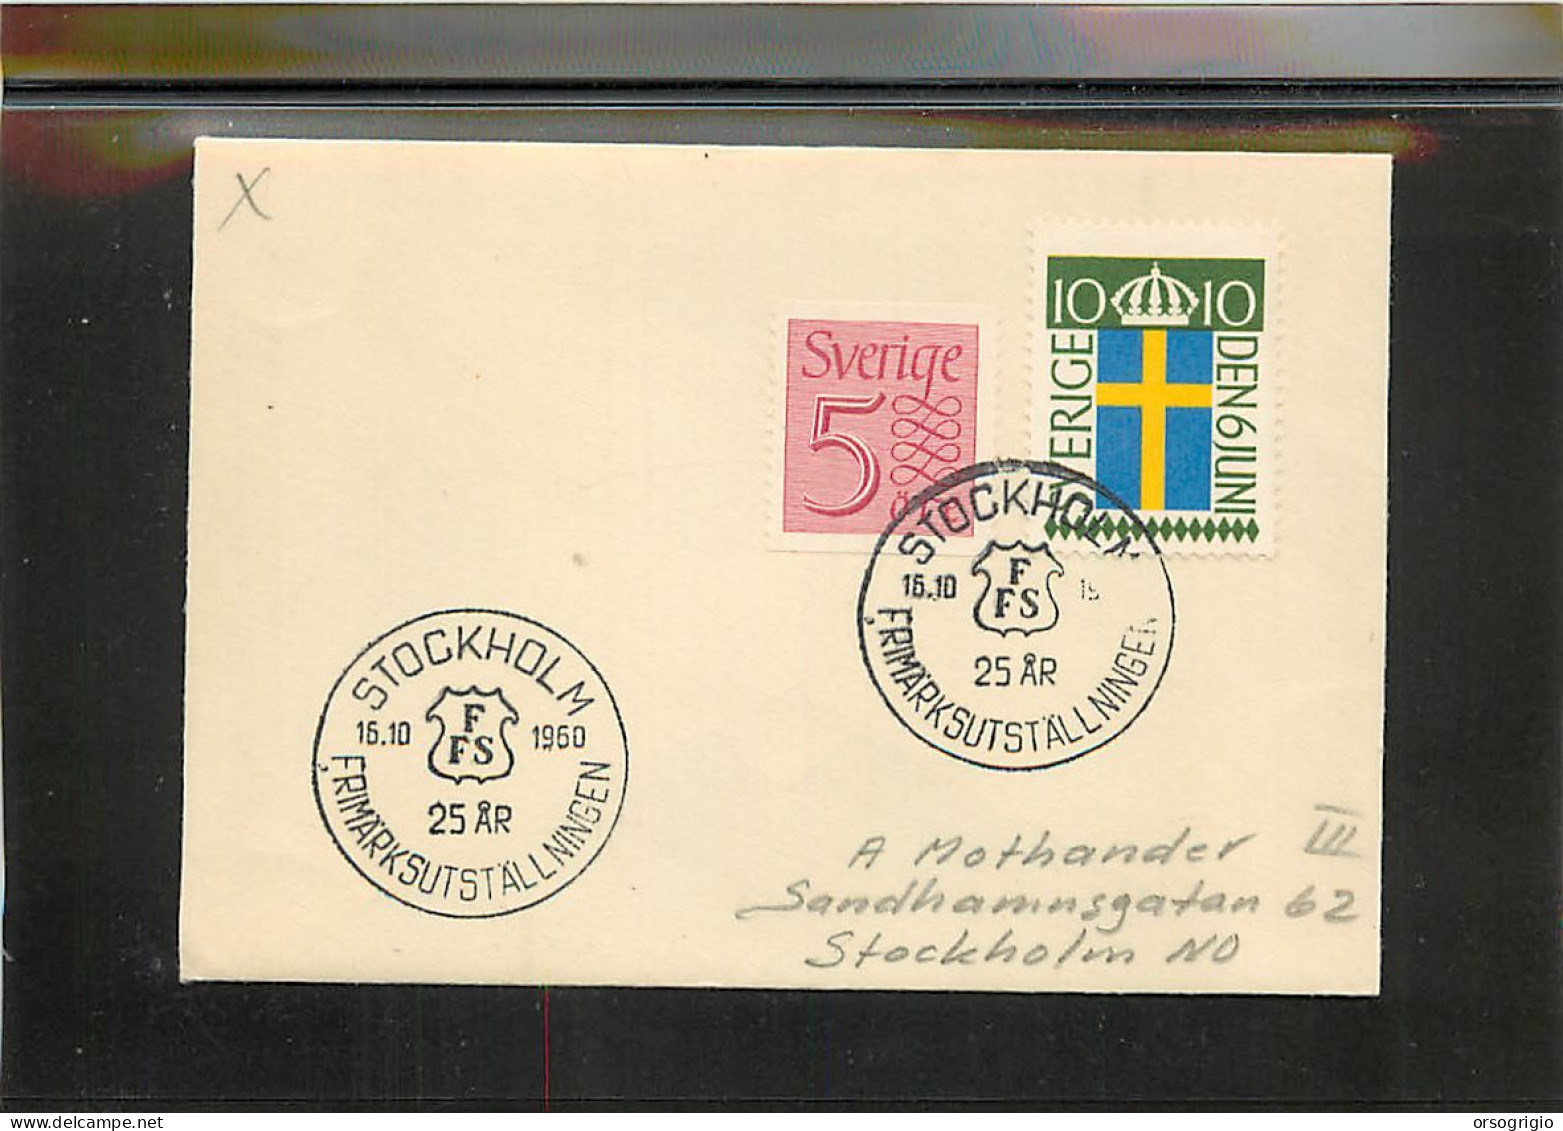 SVEZIA SVERIGE - STOCKHOLM - Covers & Documents